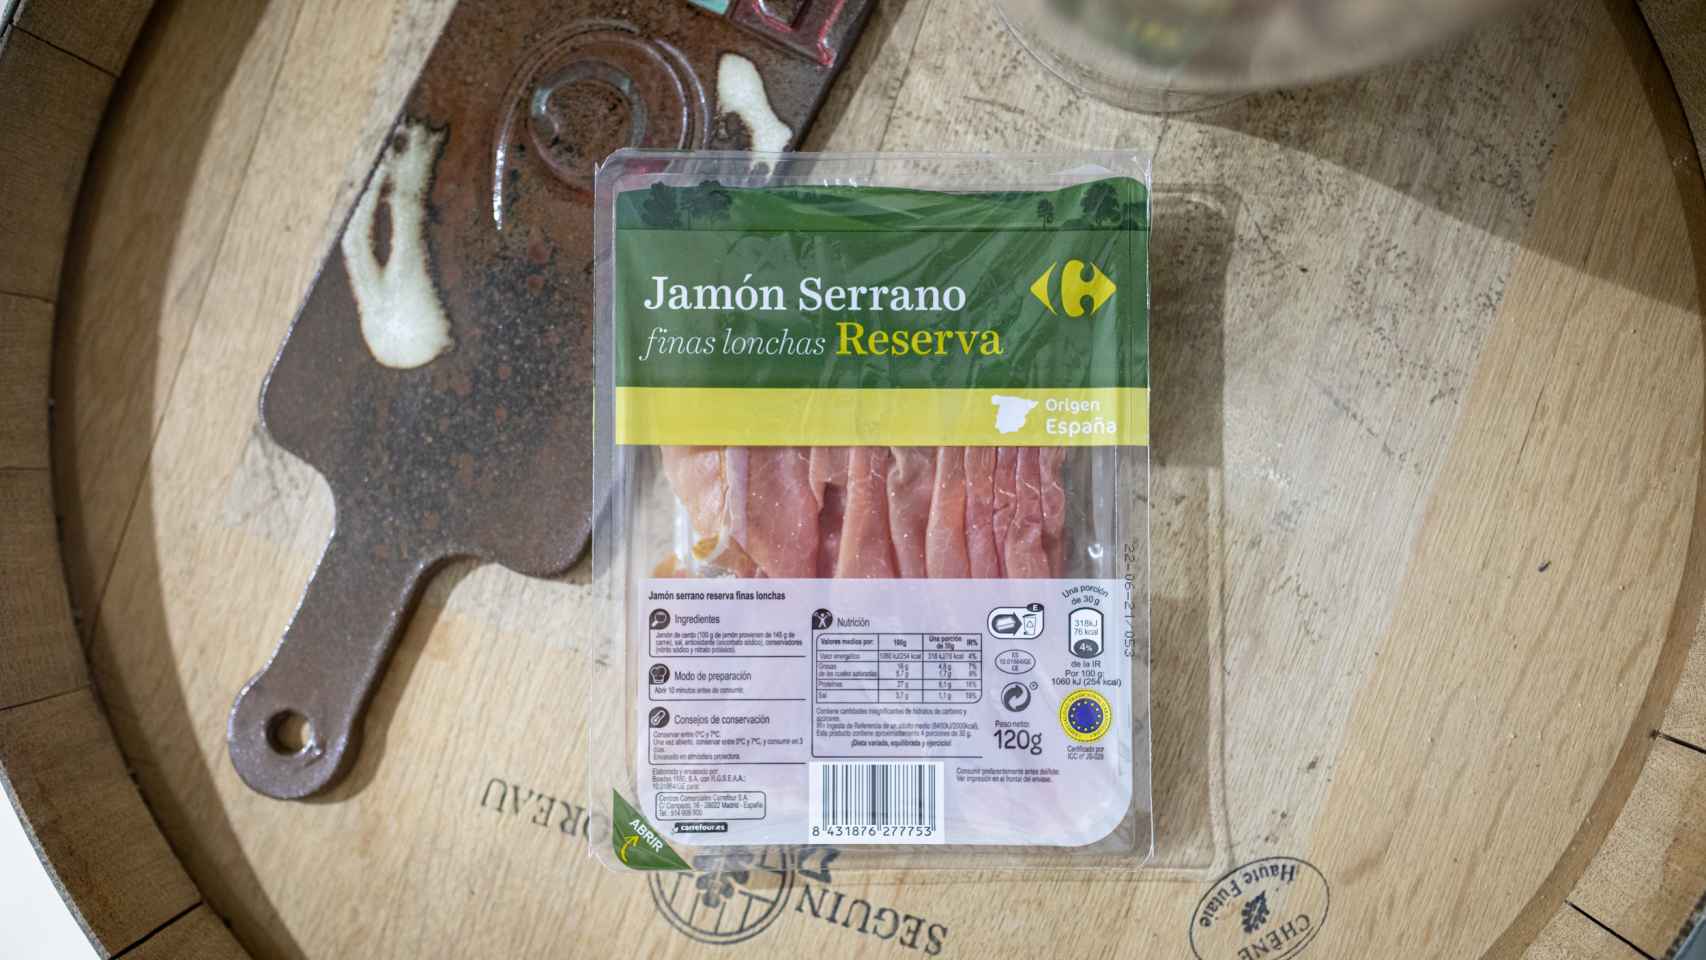 El paquete de jamón serrano de Carrefour.